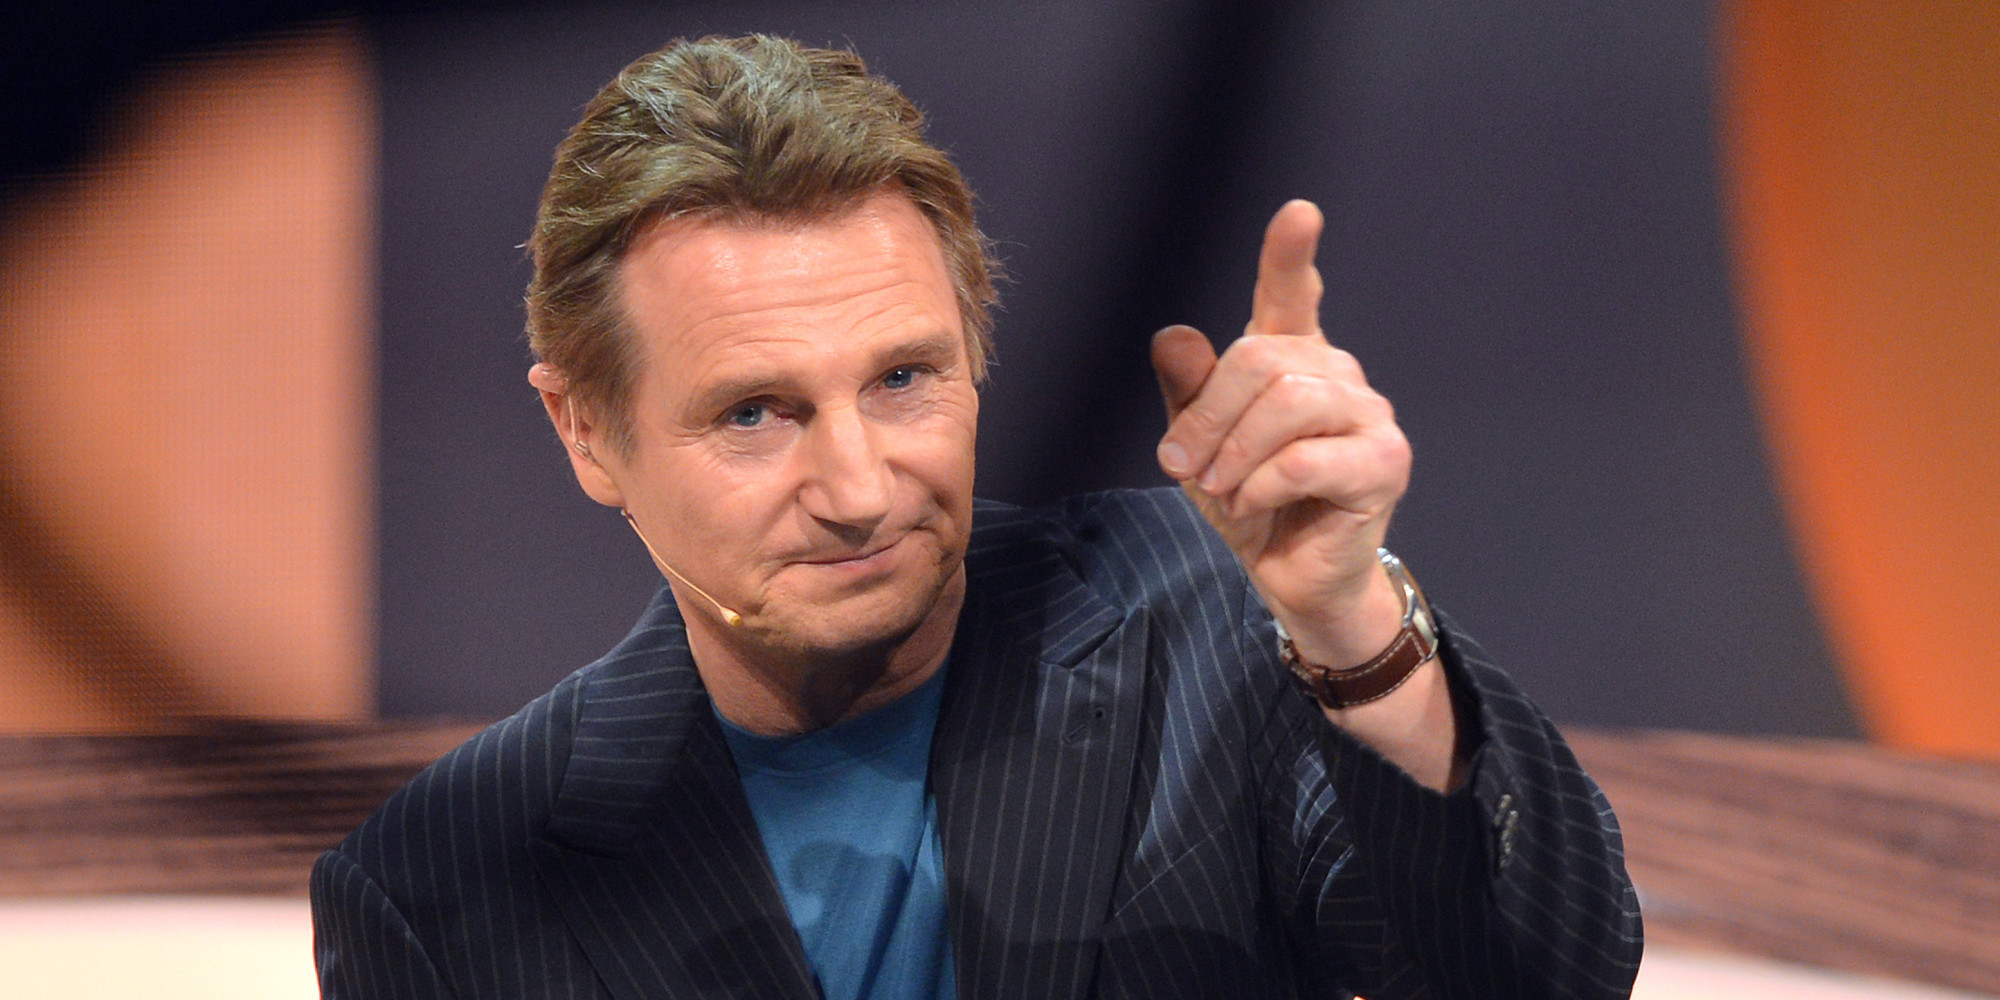 Celebrity Liam Neeson HD Wallpaper | Background Image